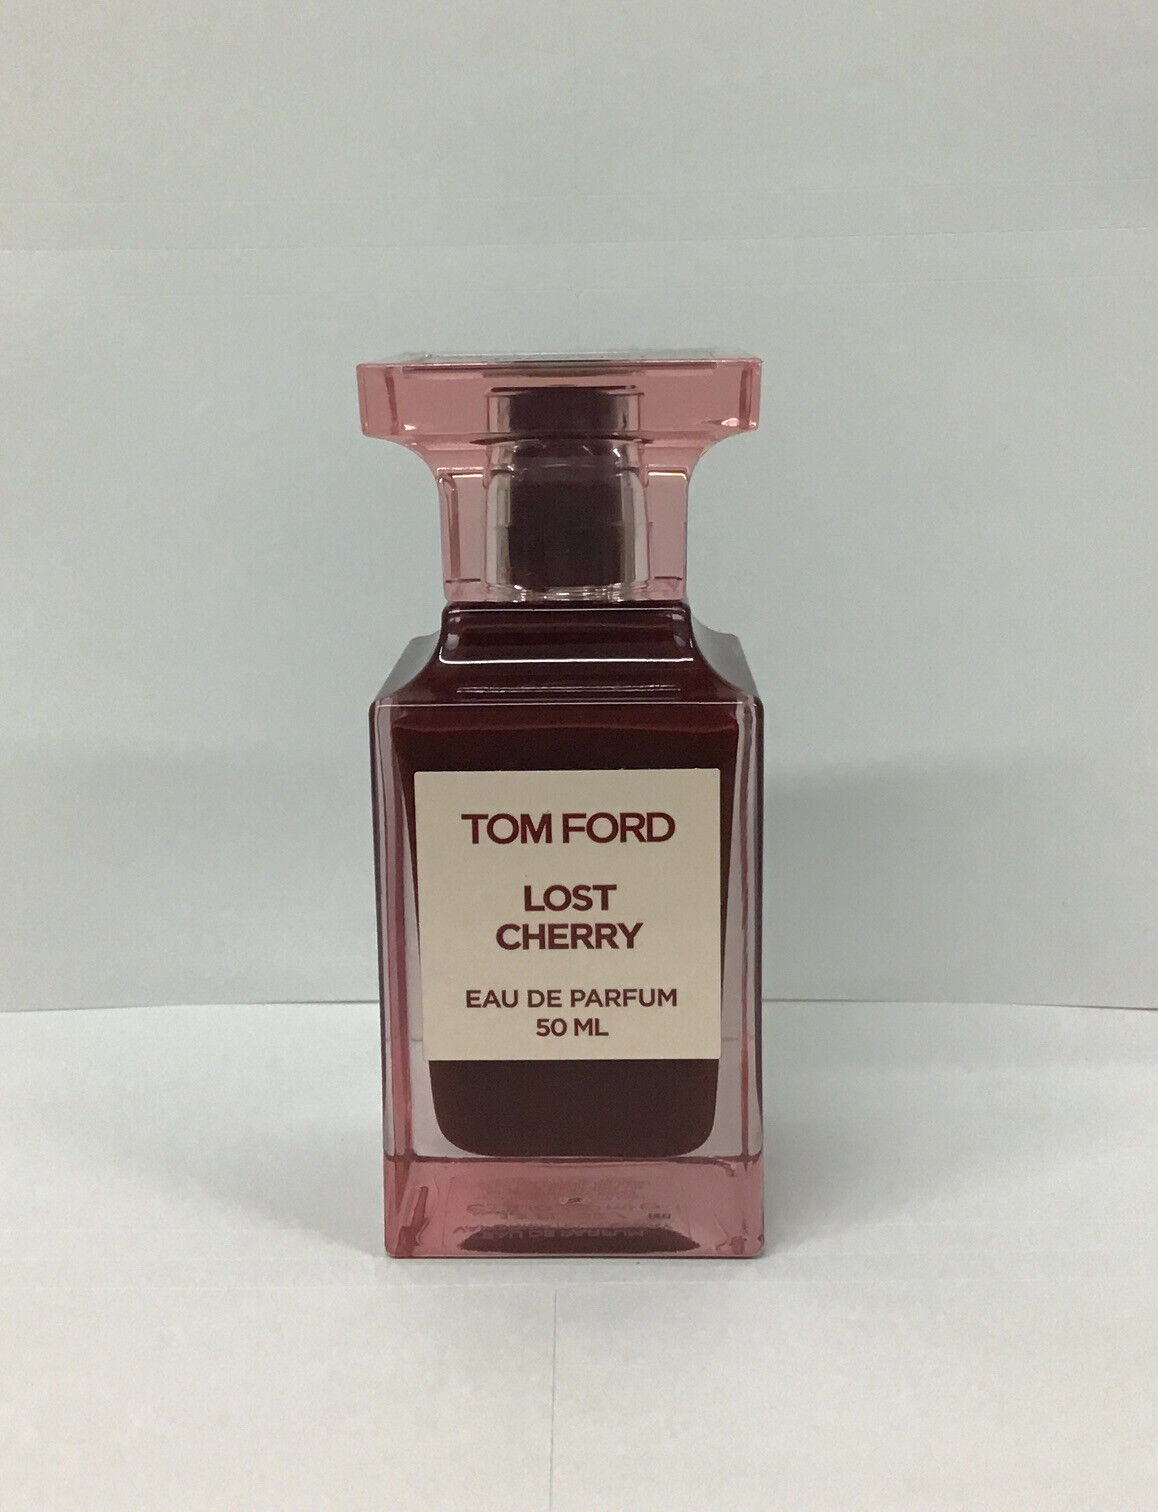 Tom Ford Lost Cherry Eau De Parfum Spray 1.7 Fl Oz, As Pictured.